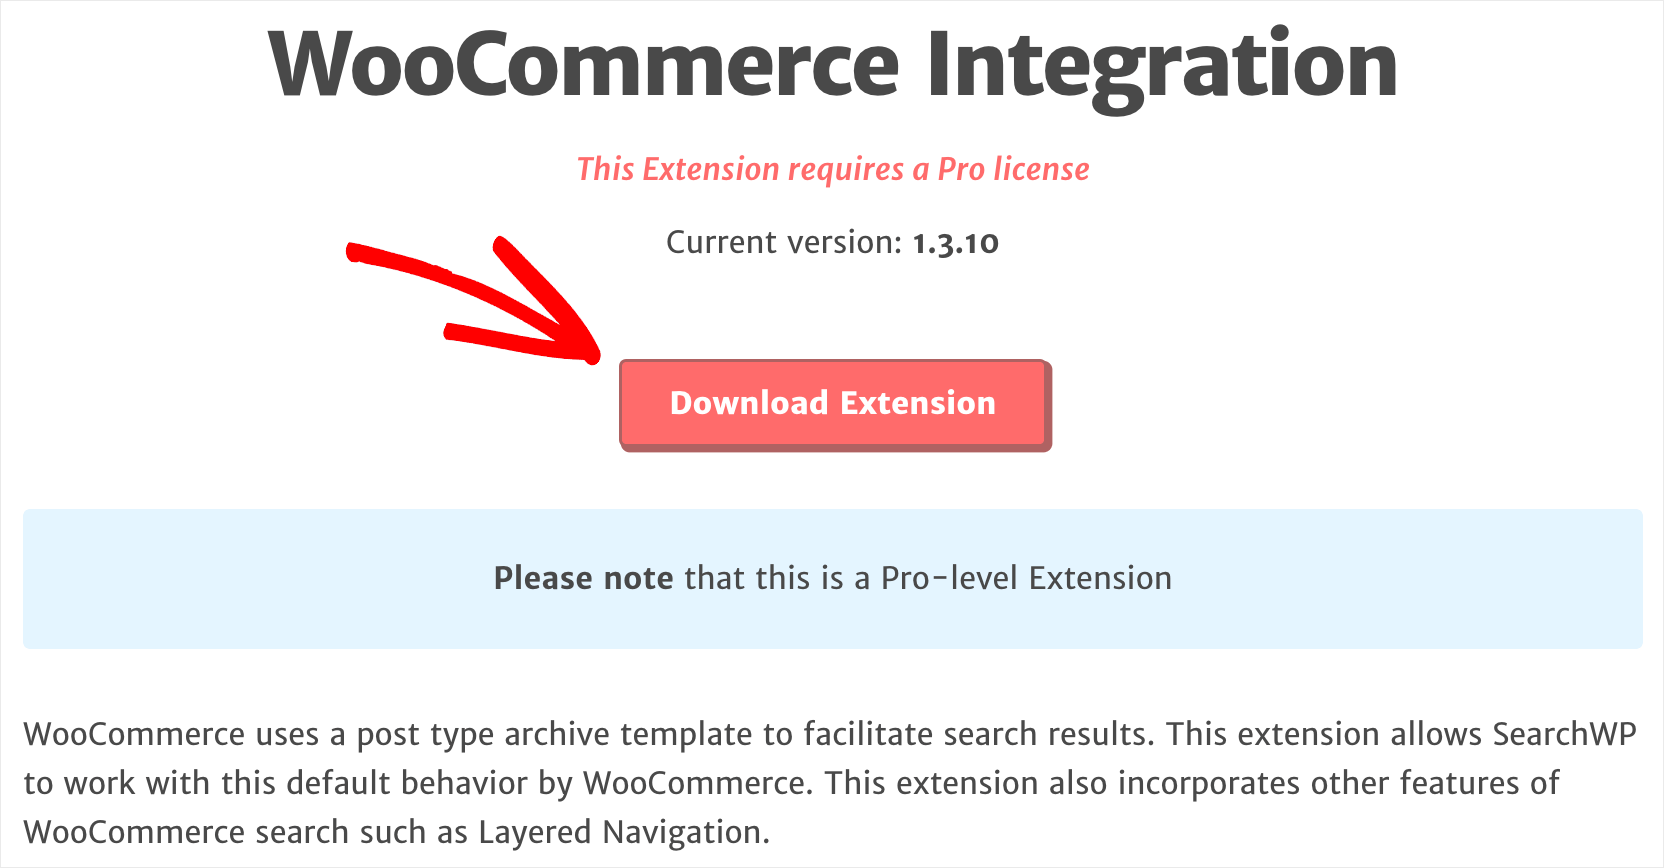 click Download Extension